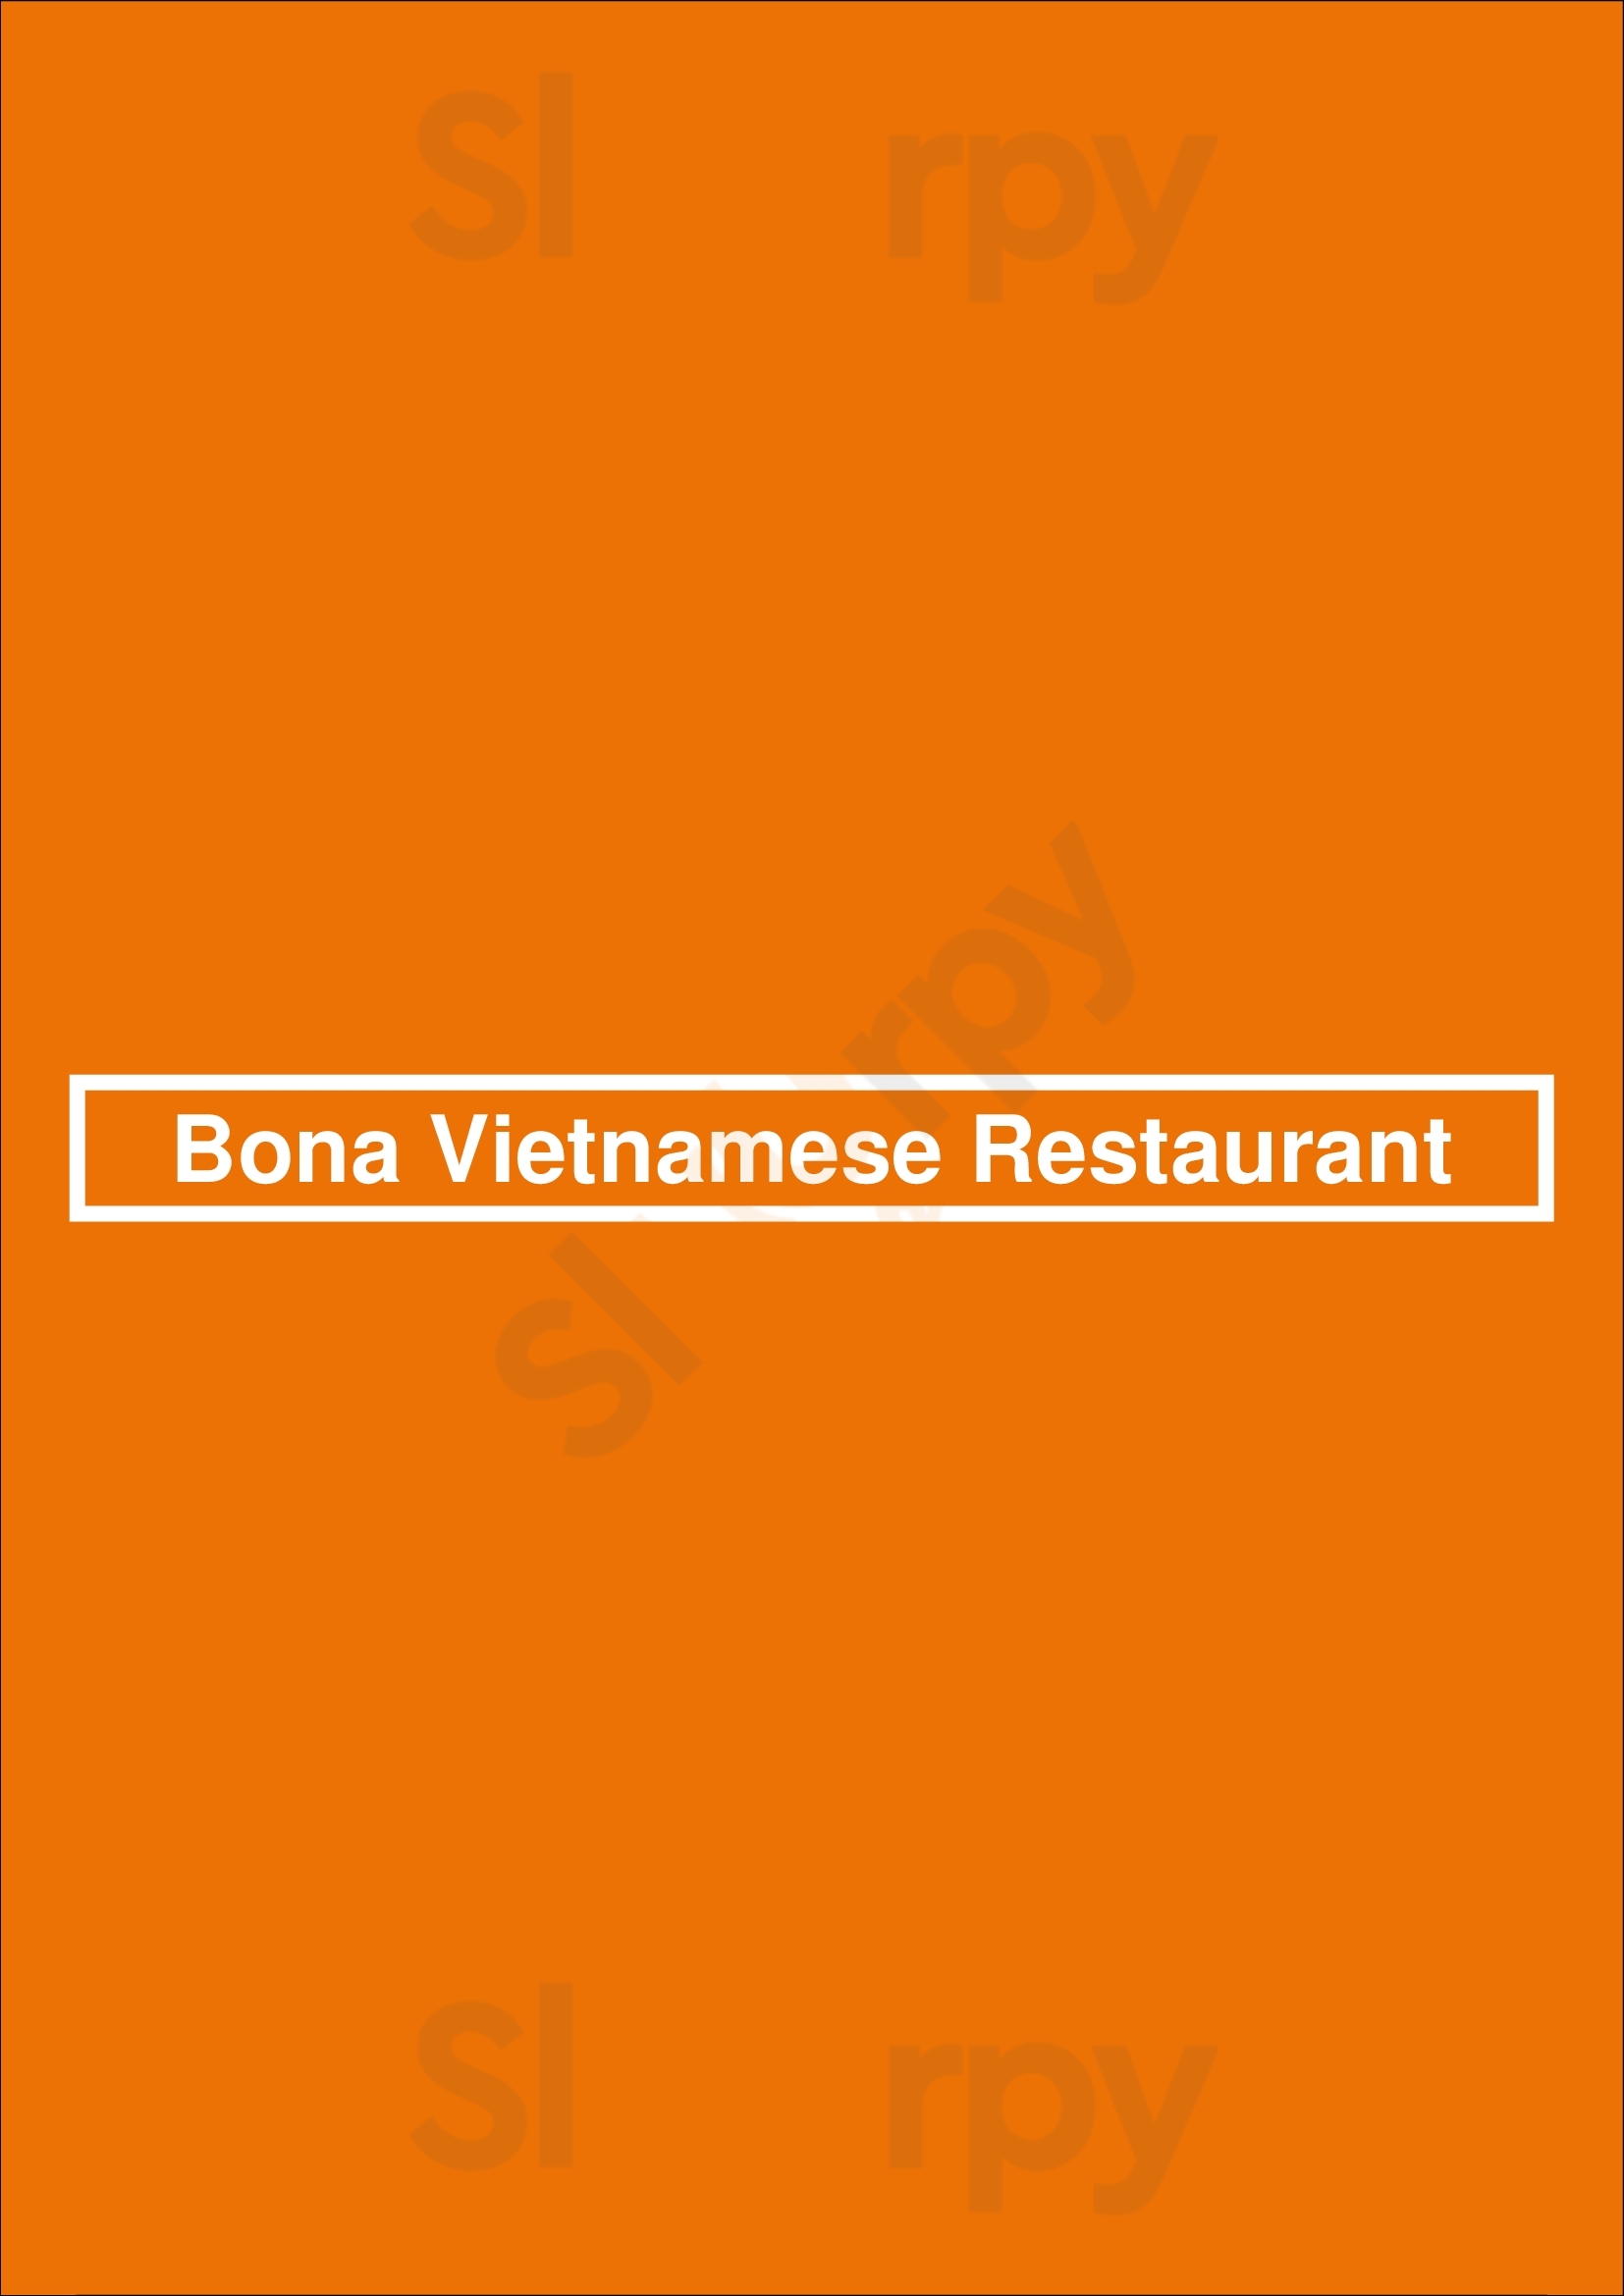 Bona Vietnamese Restaurant Minneapolis Menu - 1